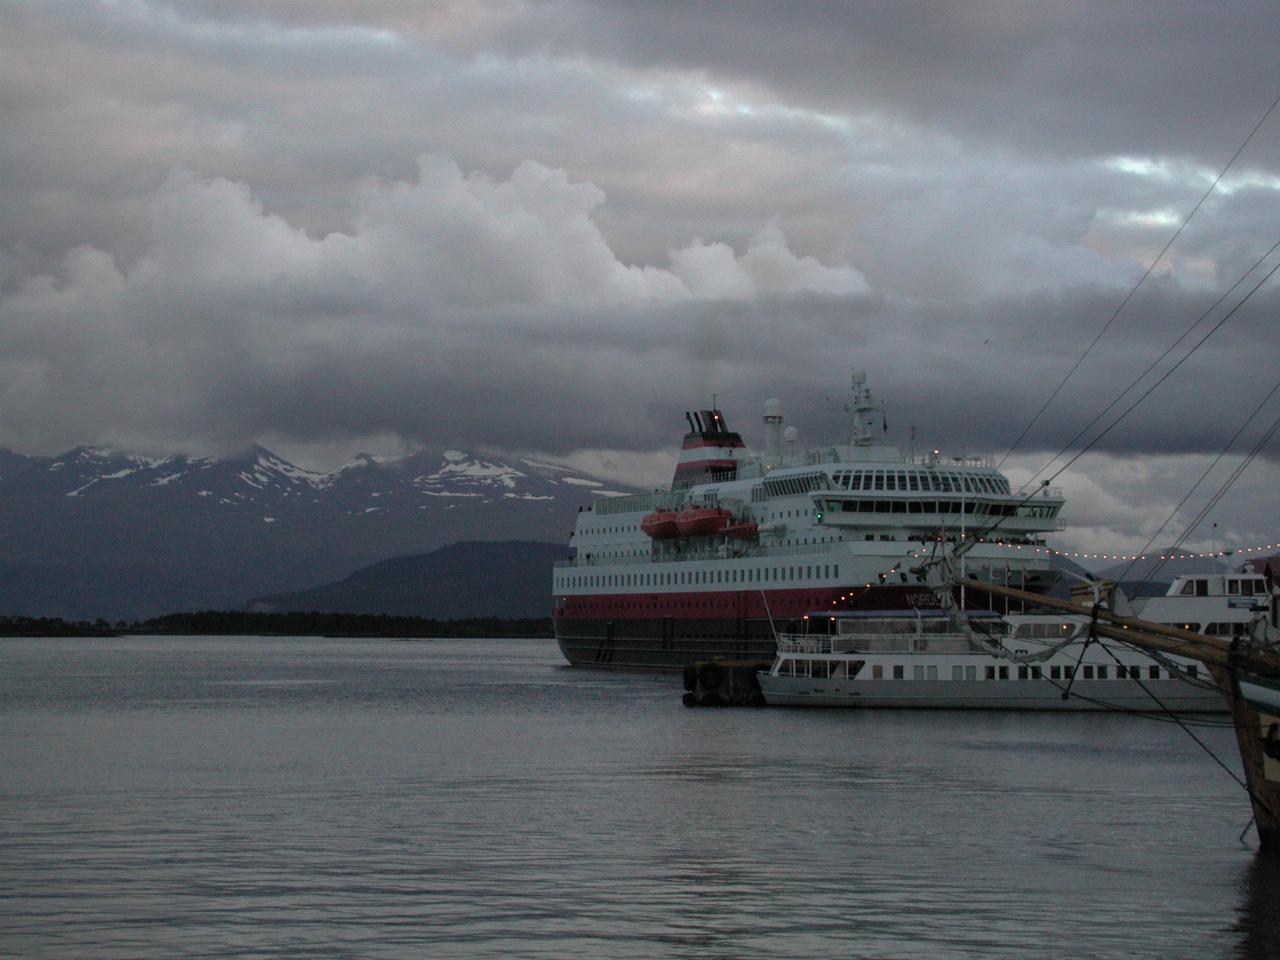 KPLU Viking Jazz: Coastal ferry at Molde wharf maneuvering away from wharf